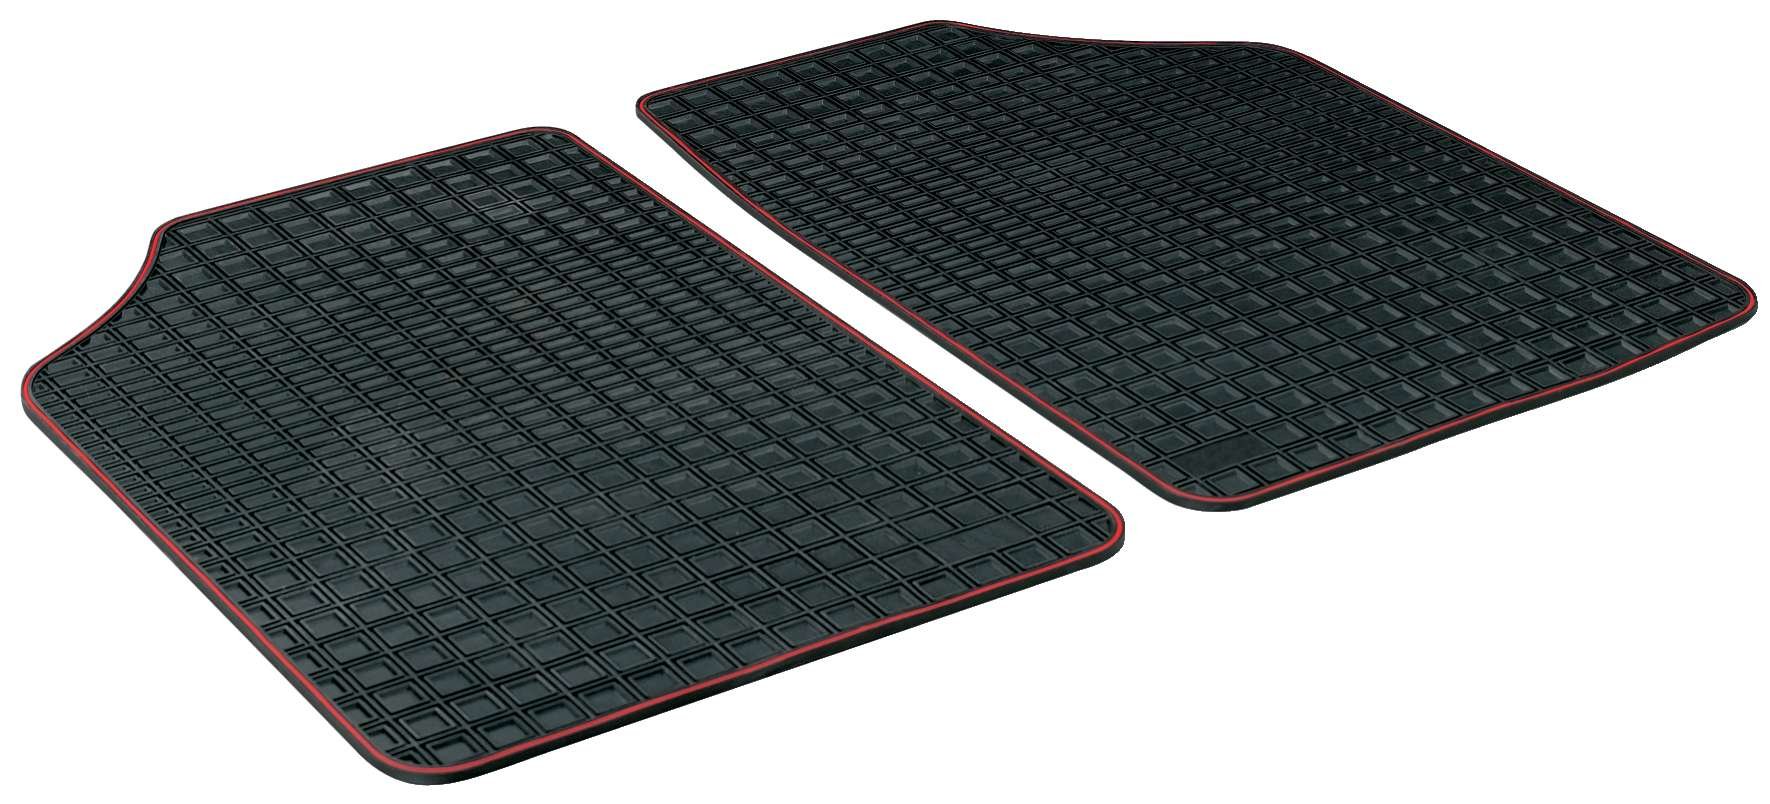 Rubber mats for Redline Premium size 2